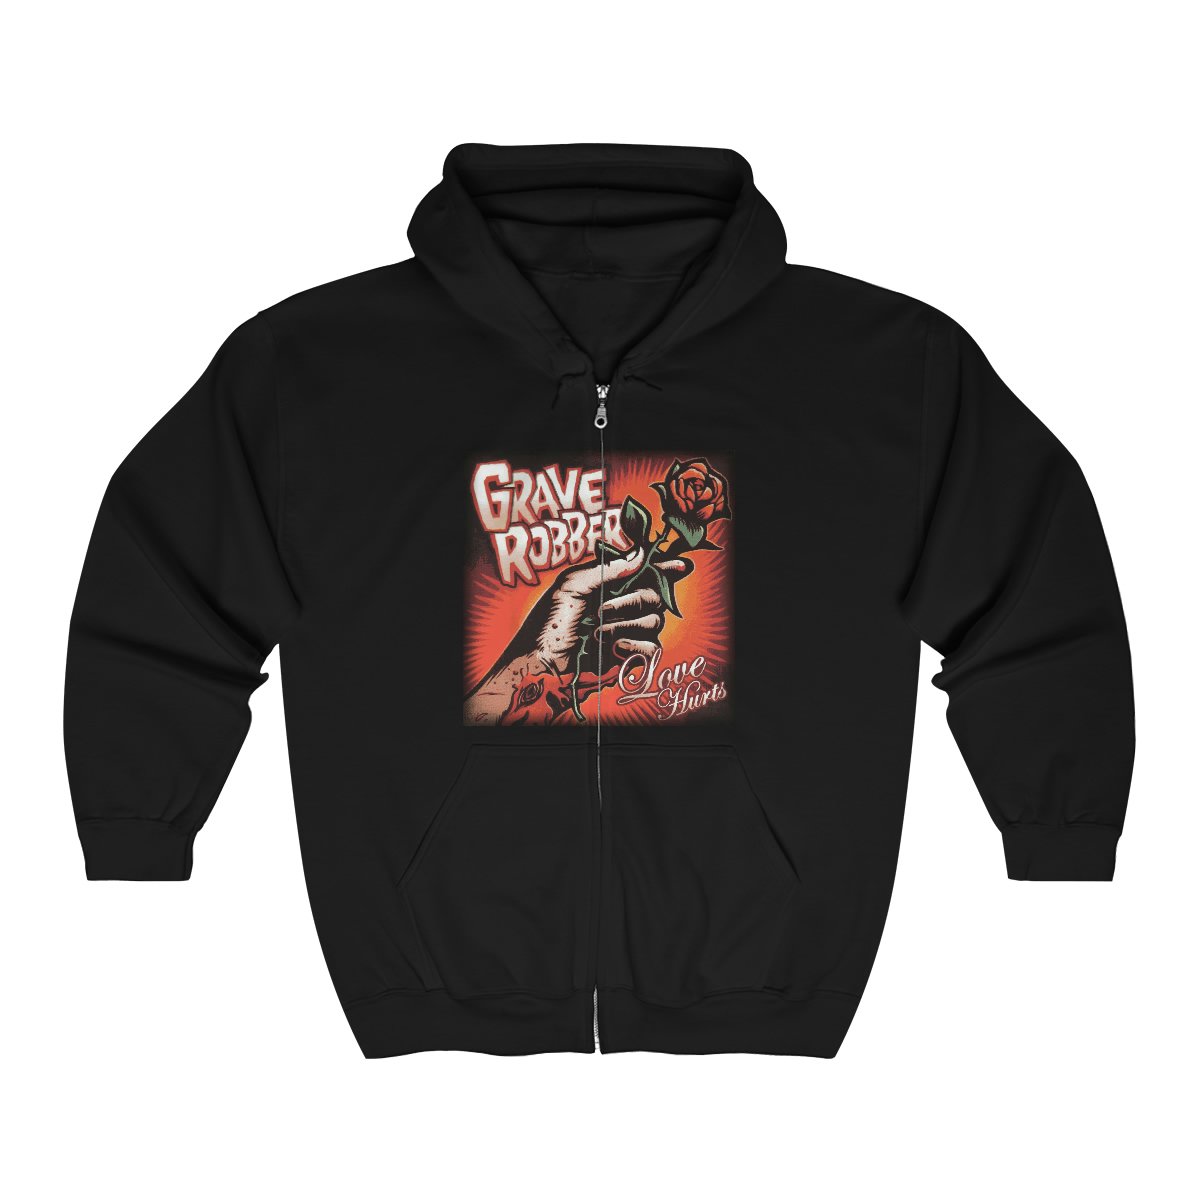 Grave Robber Love Hurts Full Zip Hooded Sweatshirt